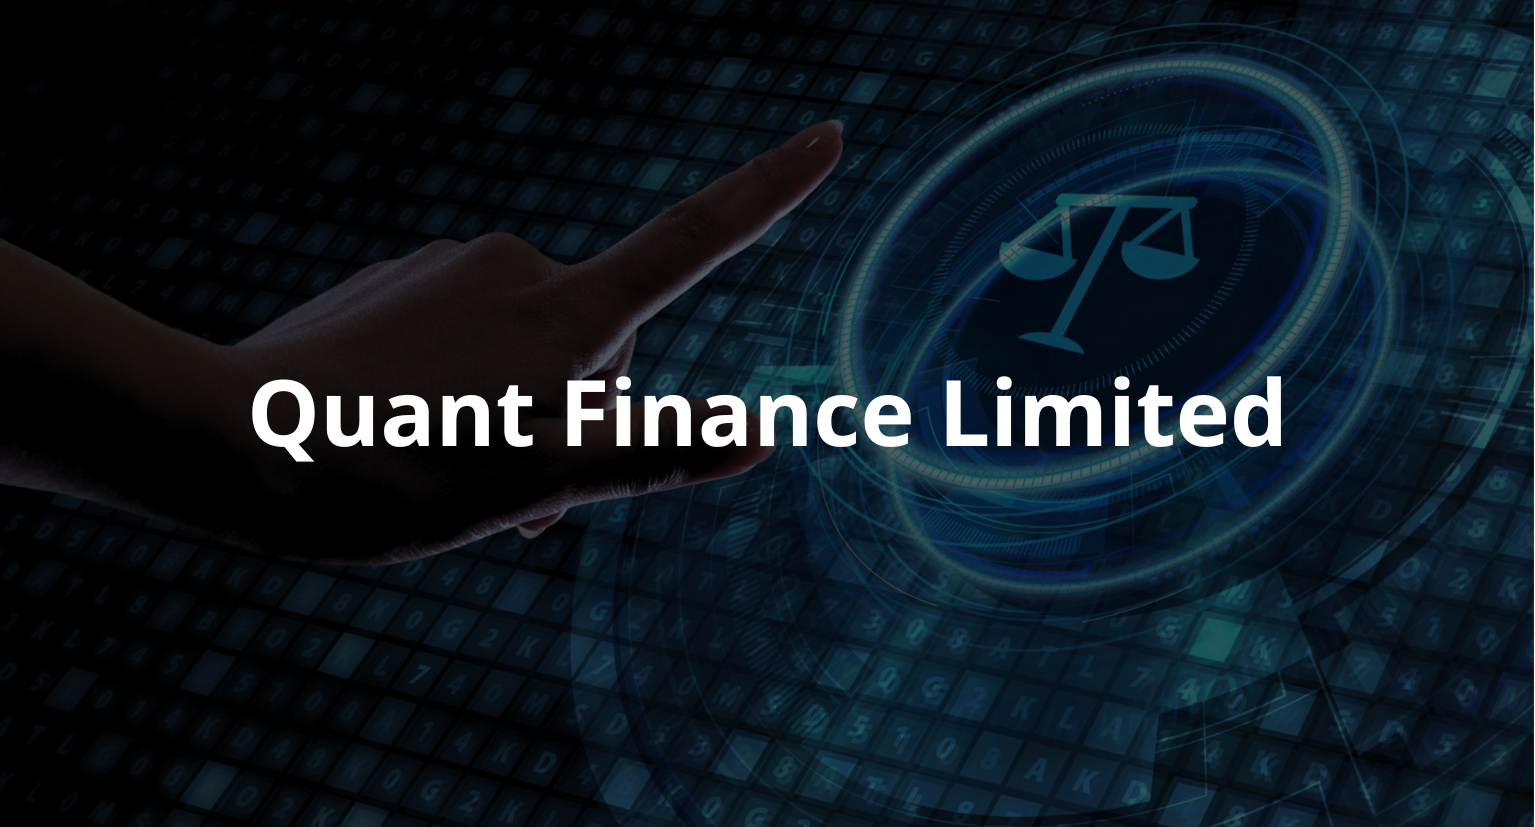 Quant Finance Limited